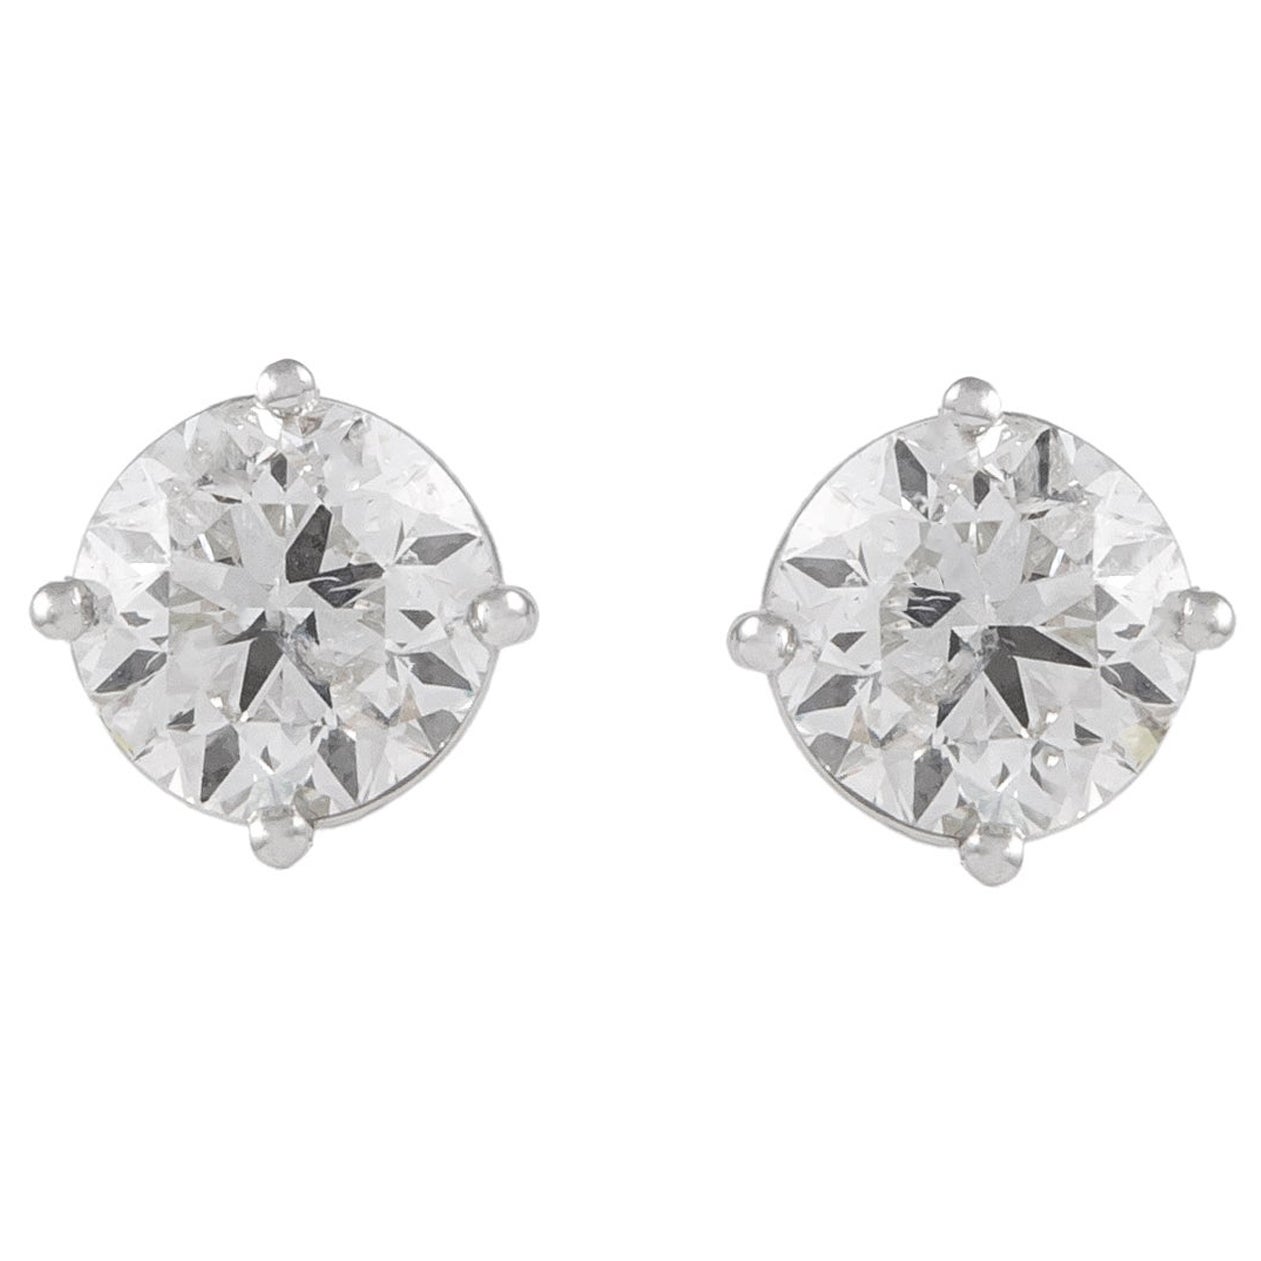 Alexander EGL Certified 2.02 Carat Diamond Stud Earrings 18k White Gold For Sale